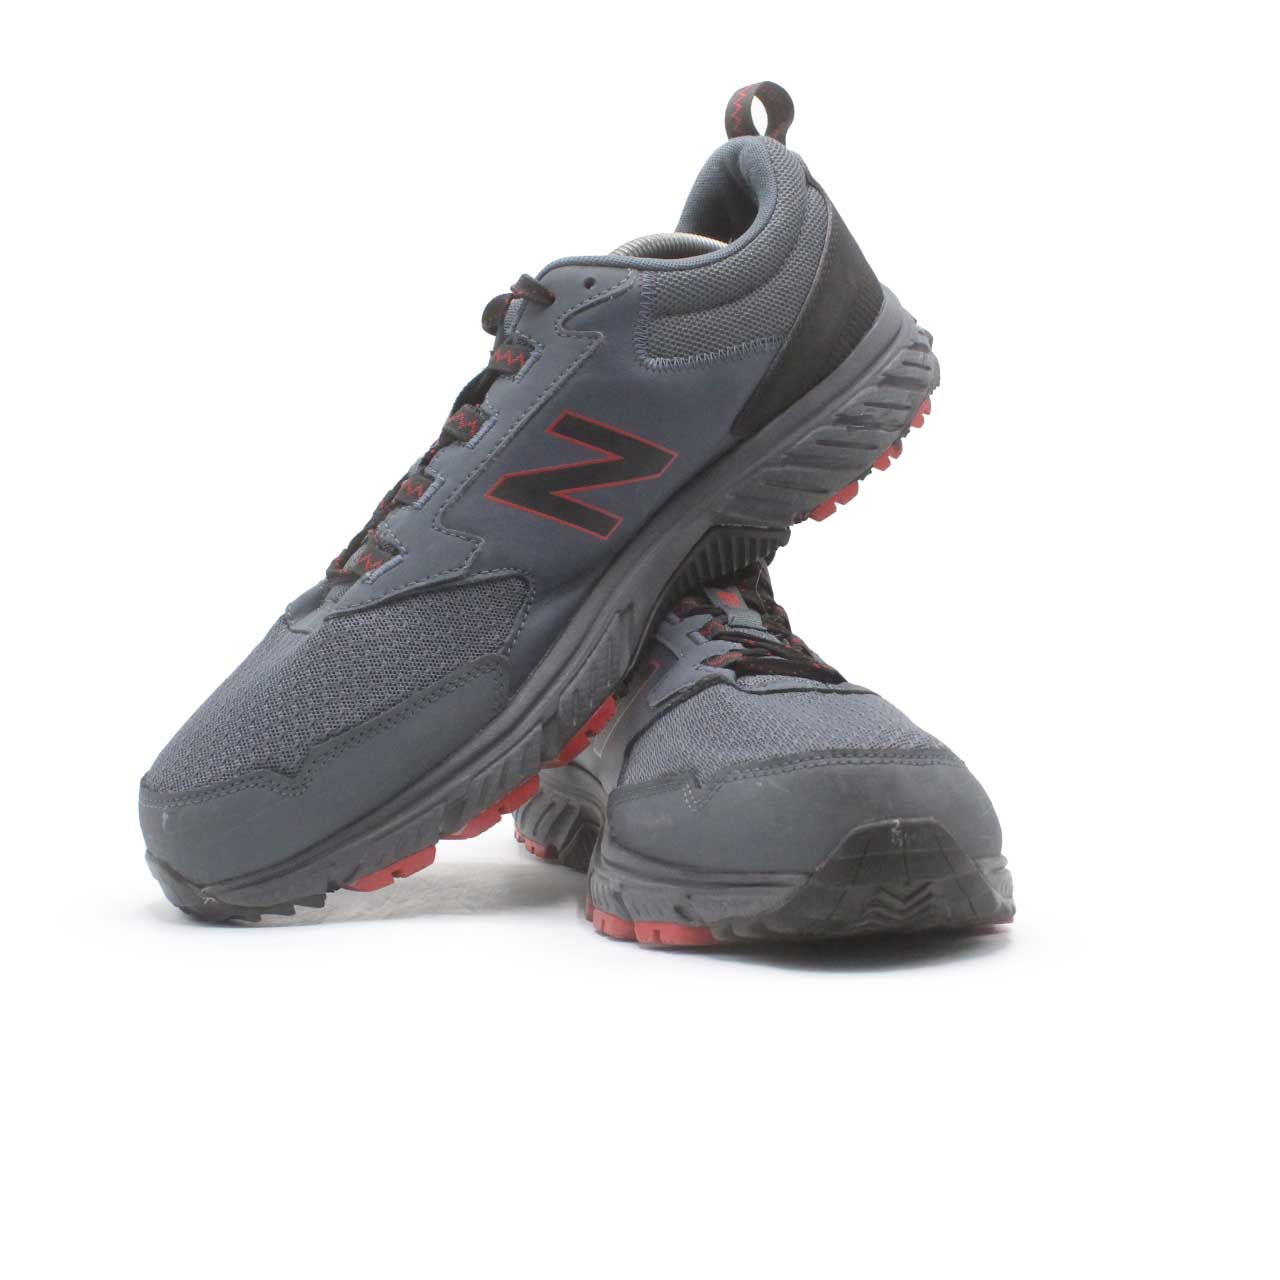 New Balance 510 V5 Running Shoe